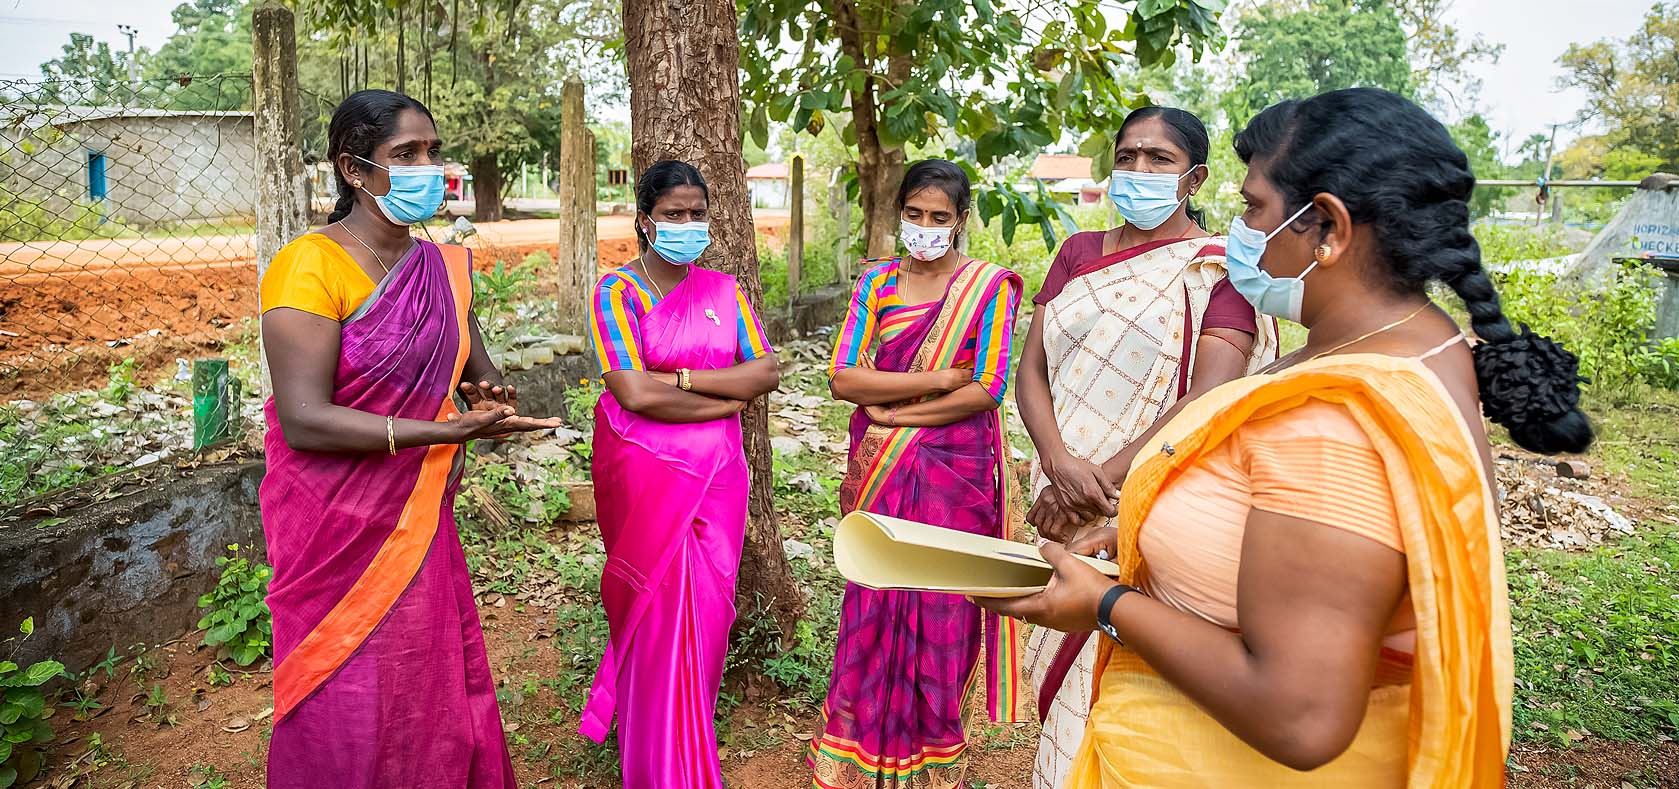 Social activist Micheal Lusiya (far right) meets with community members in Vavuniya, Northern Province, Sri Lanka on 11 March 2022. Photo: UN Women/Raveendra Rohana